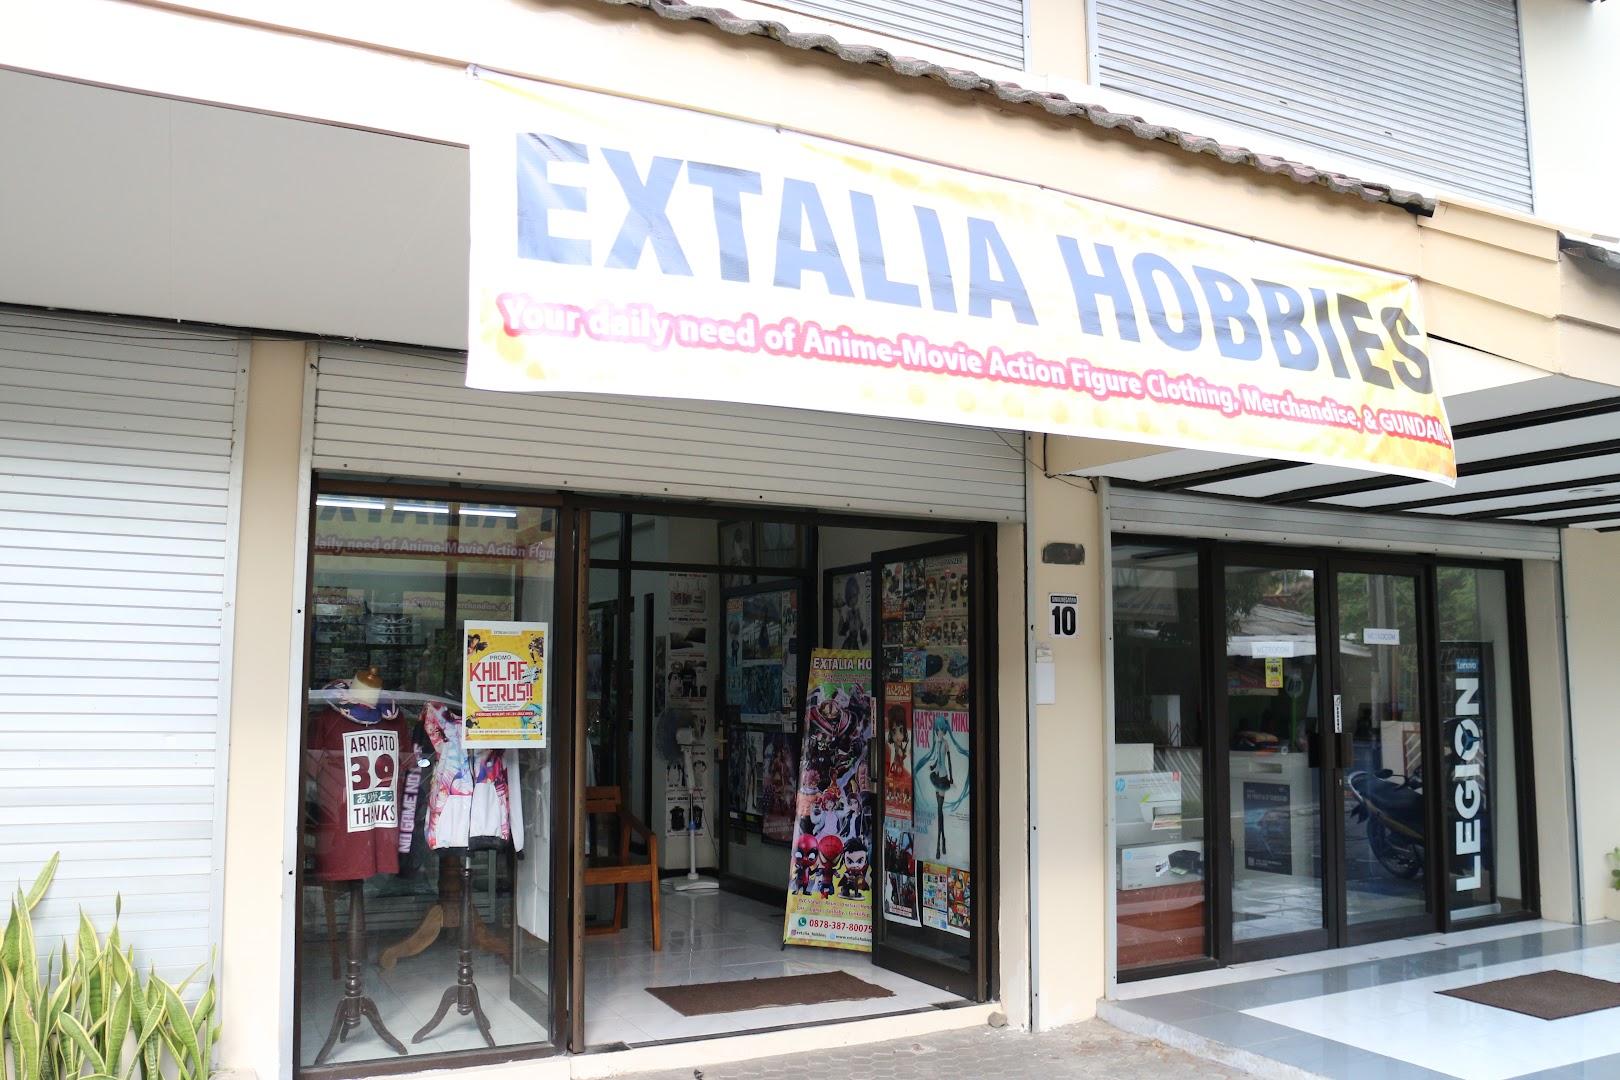 Extalia Hobbies Photo